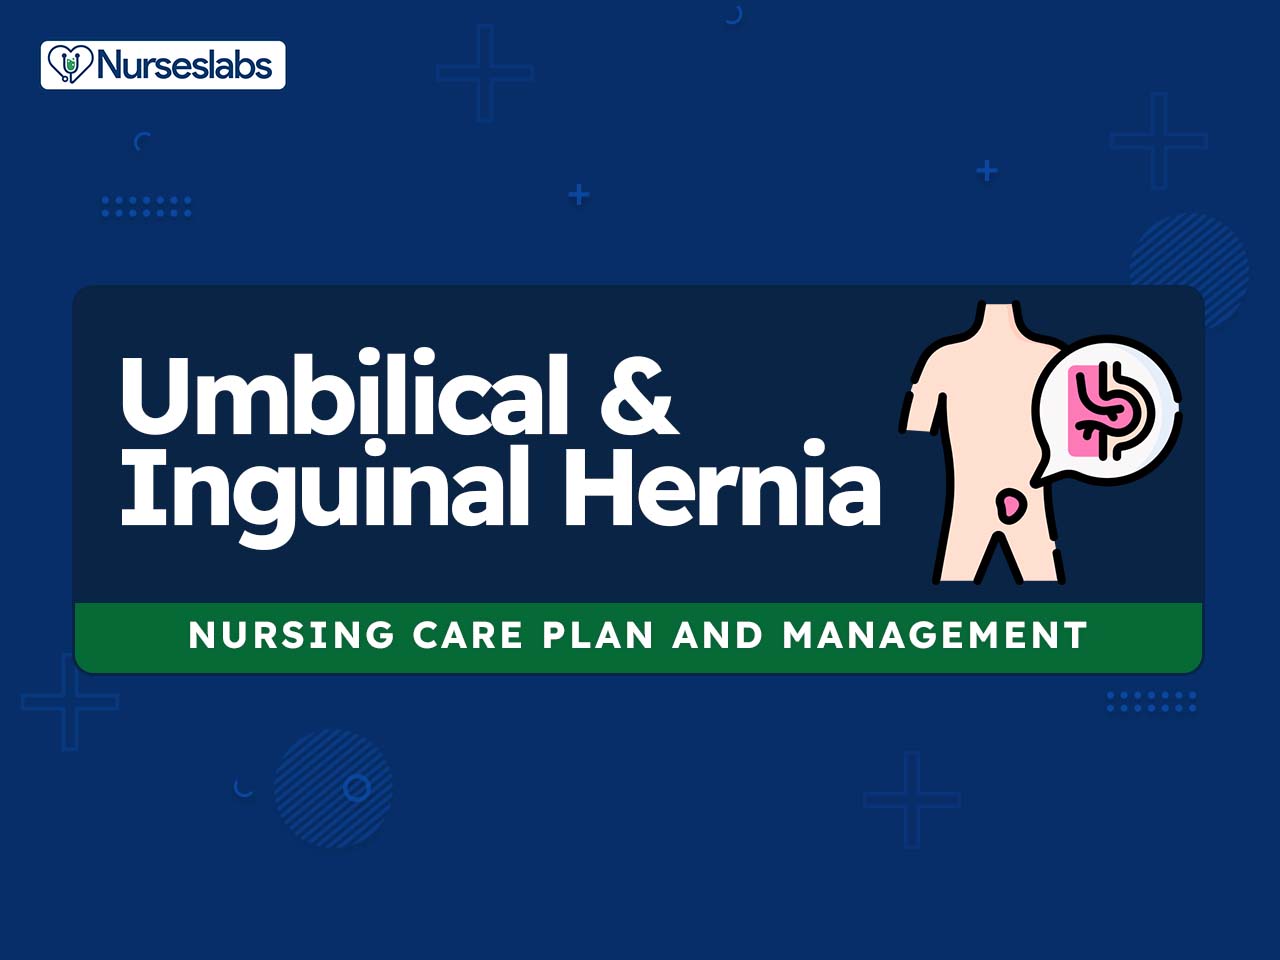 Umbilical hernia: What is it, symptoms and repair